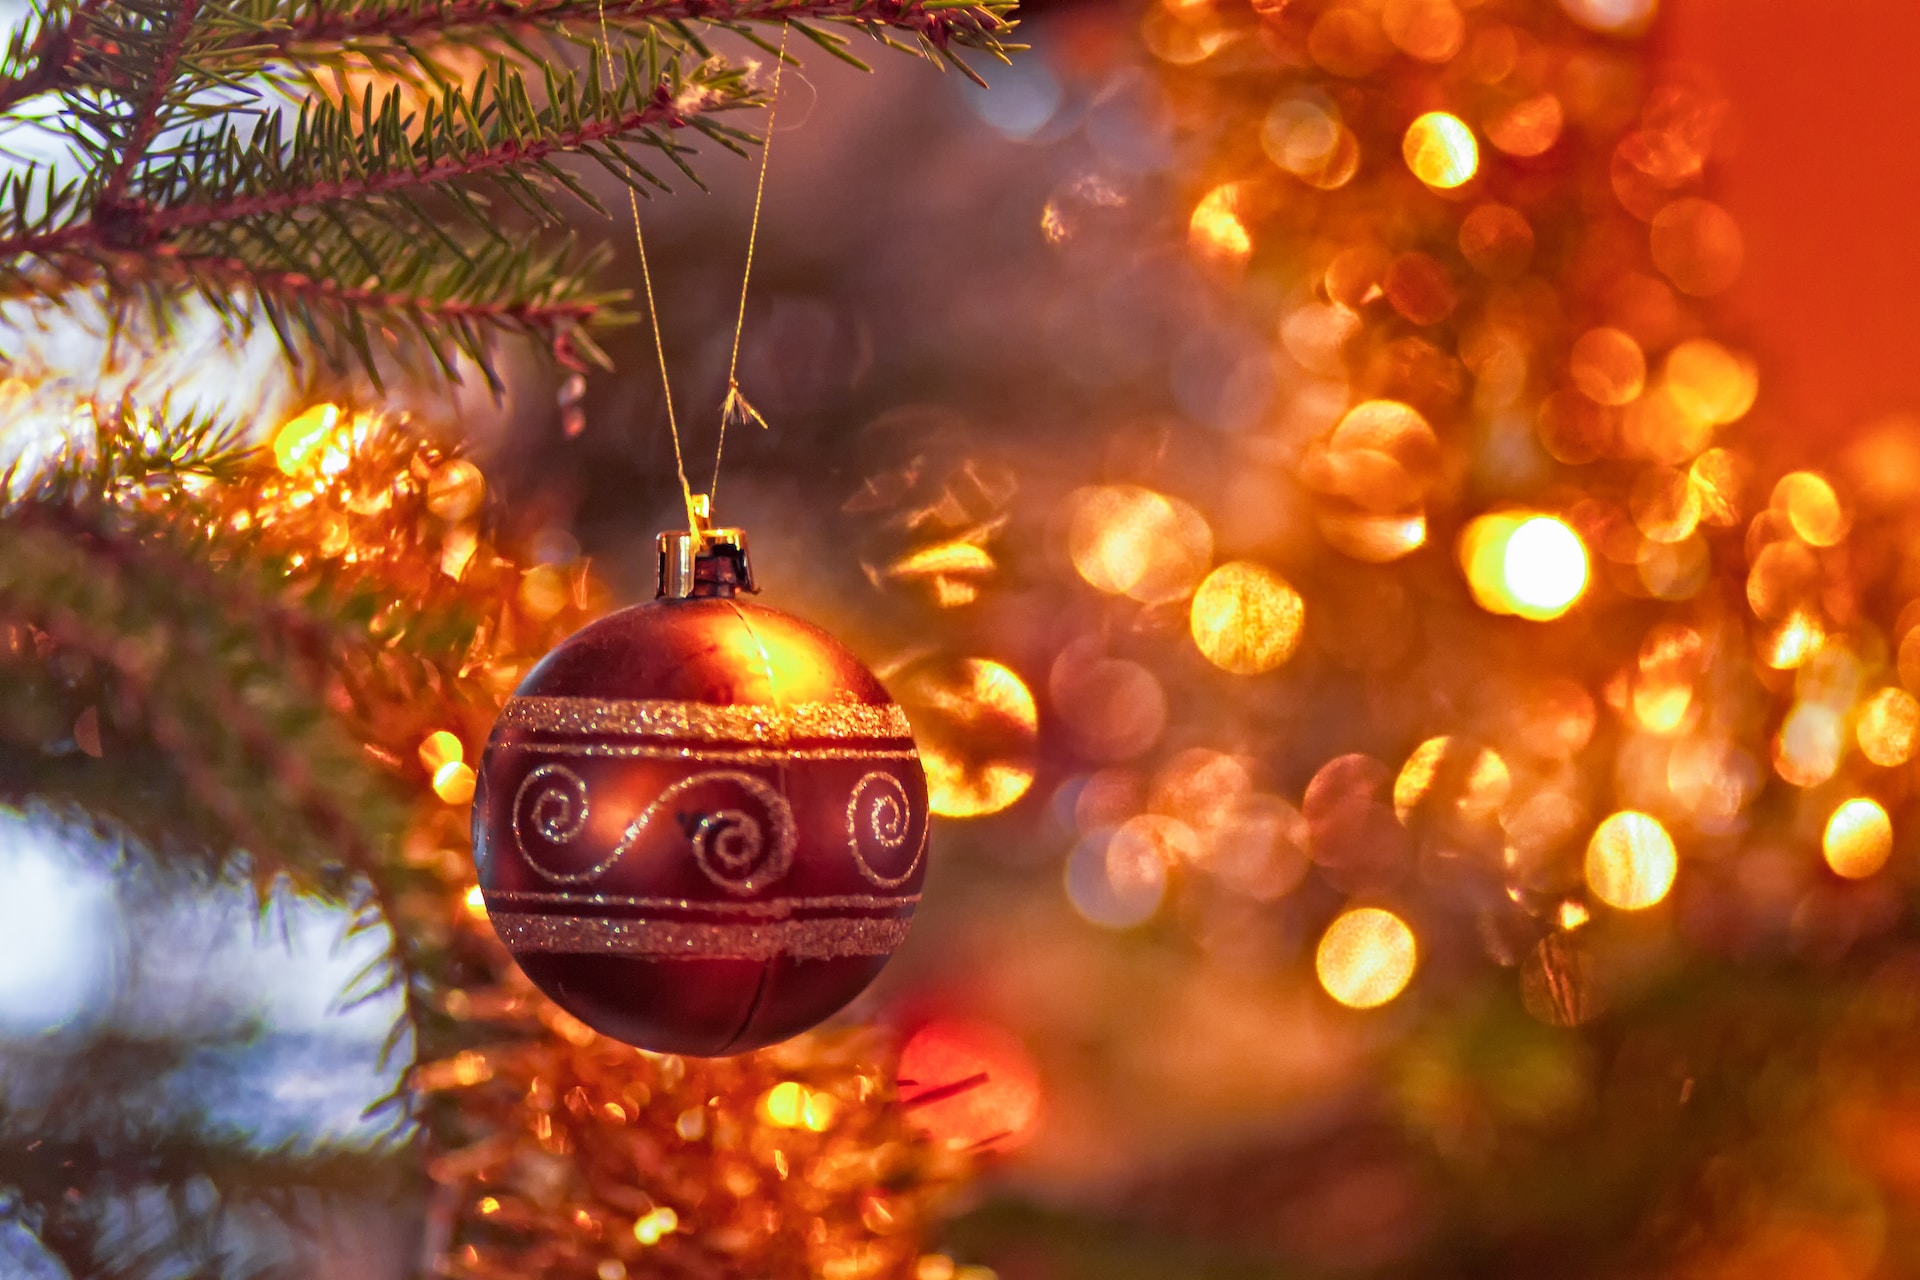 A classic Finnish Christmas tree decoration.